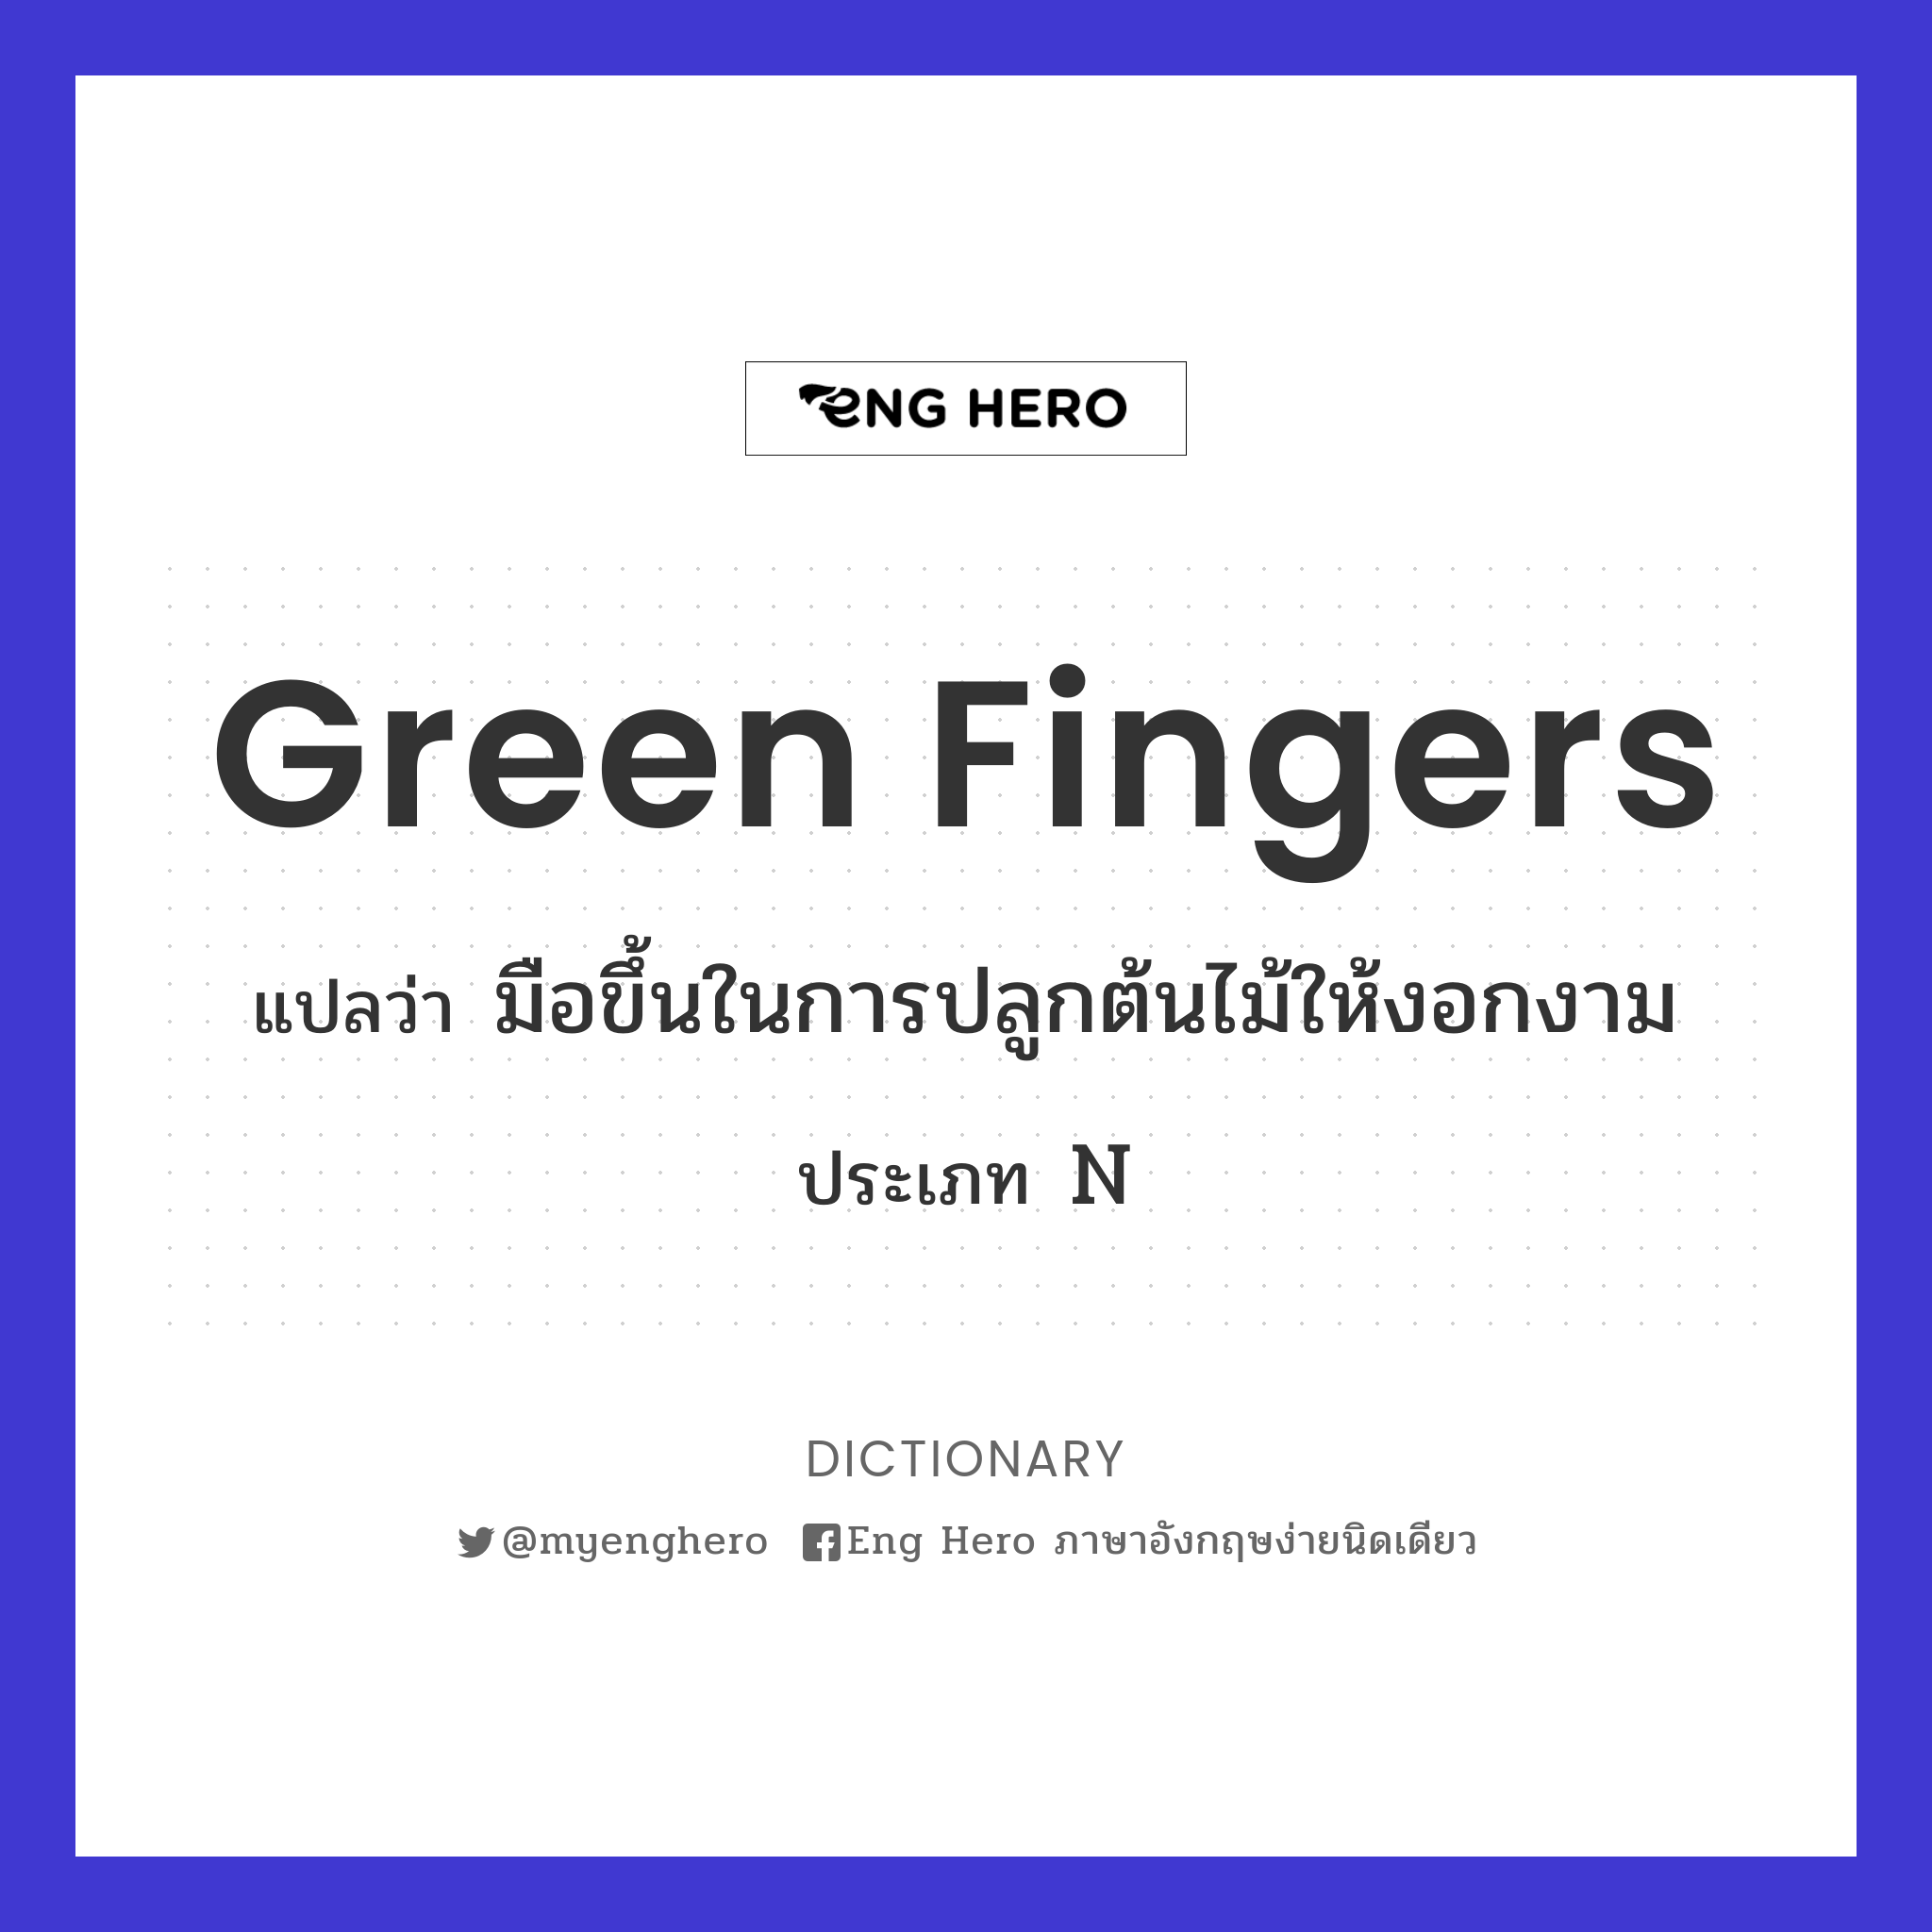 green fingers